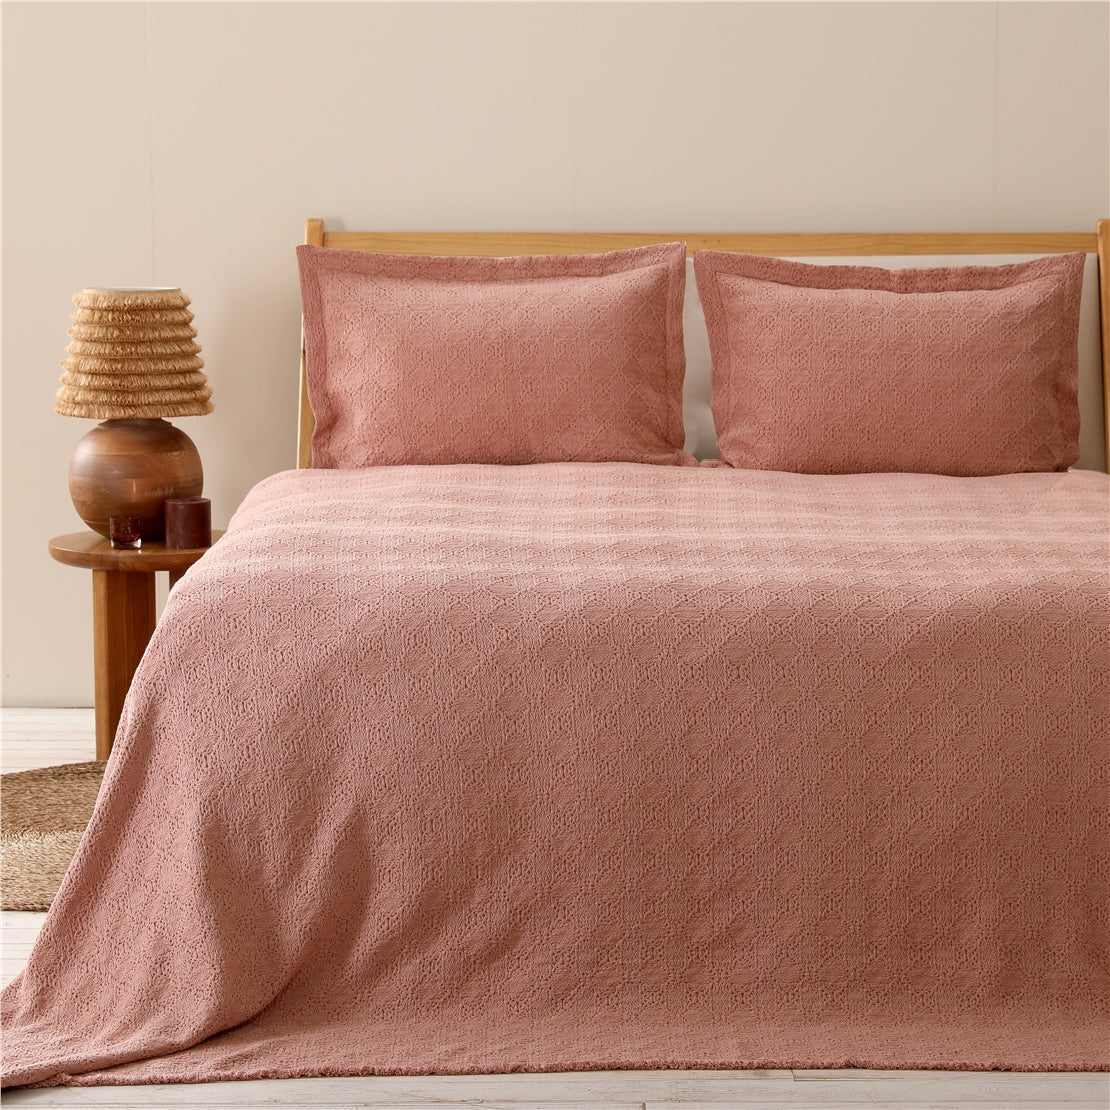 طقم غطاء سرير صوفيا مقاس ثنائي 240 × 250 سم سيمون داكن من شاكرا